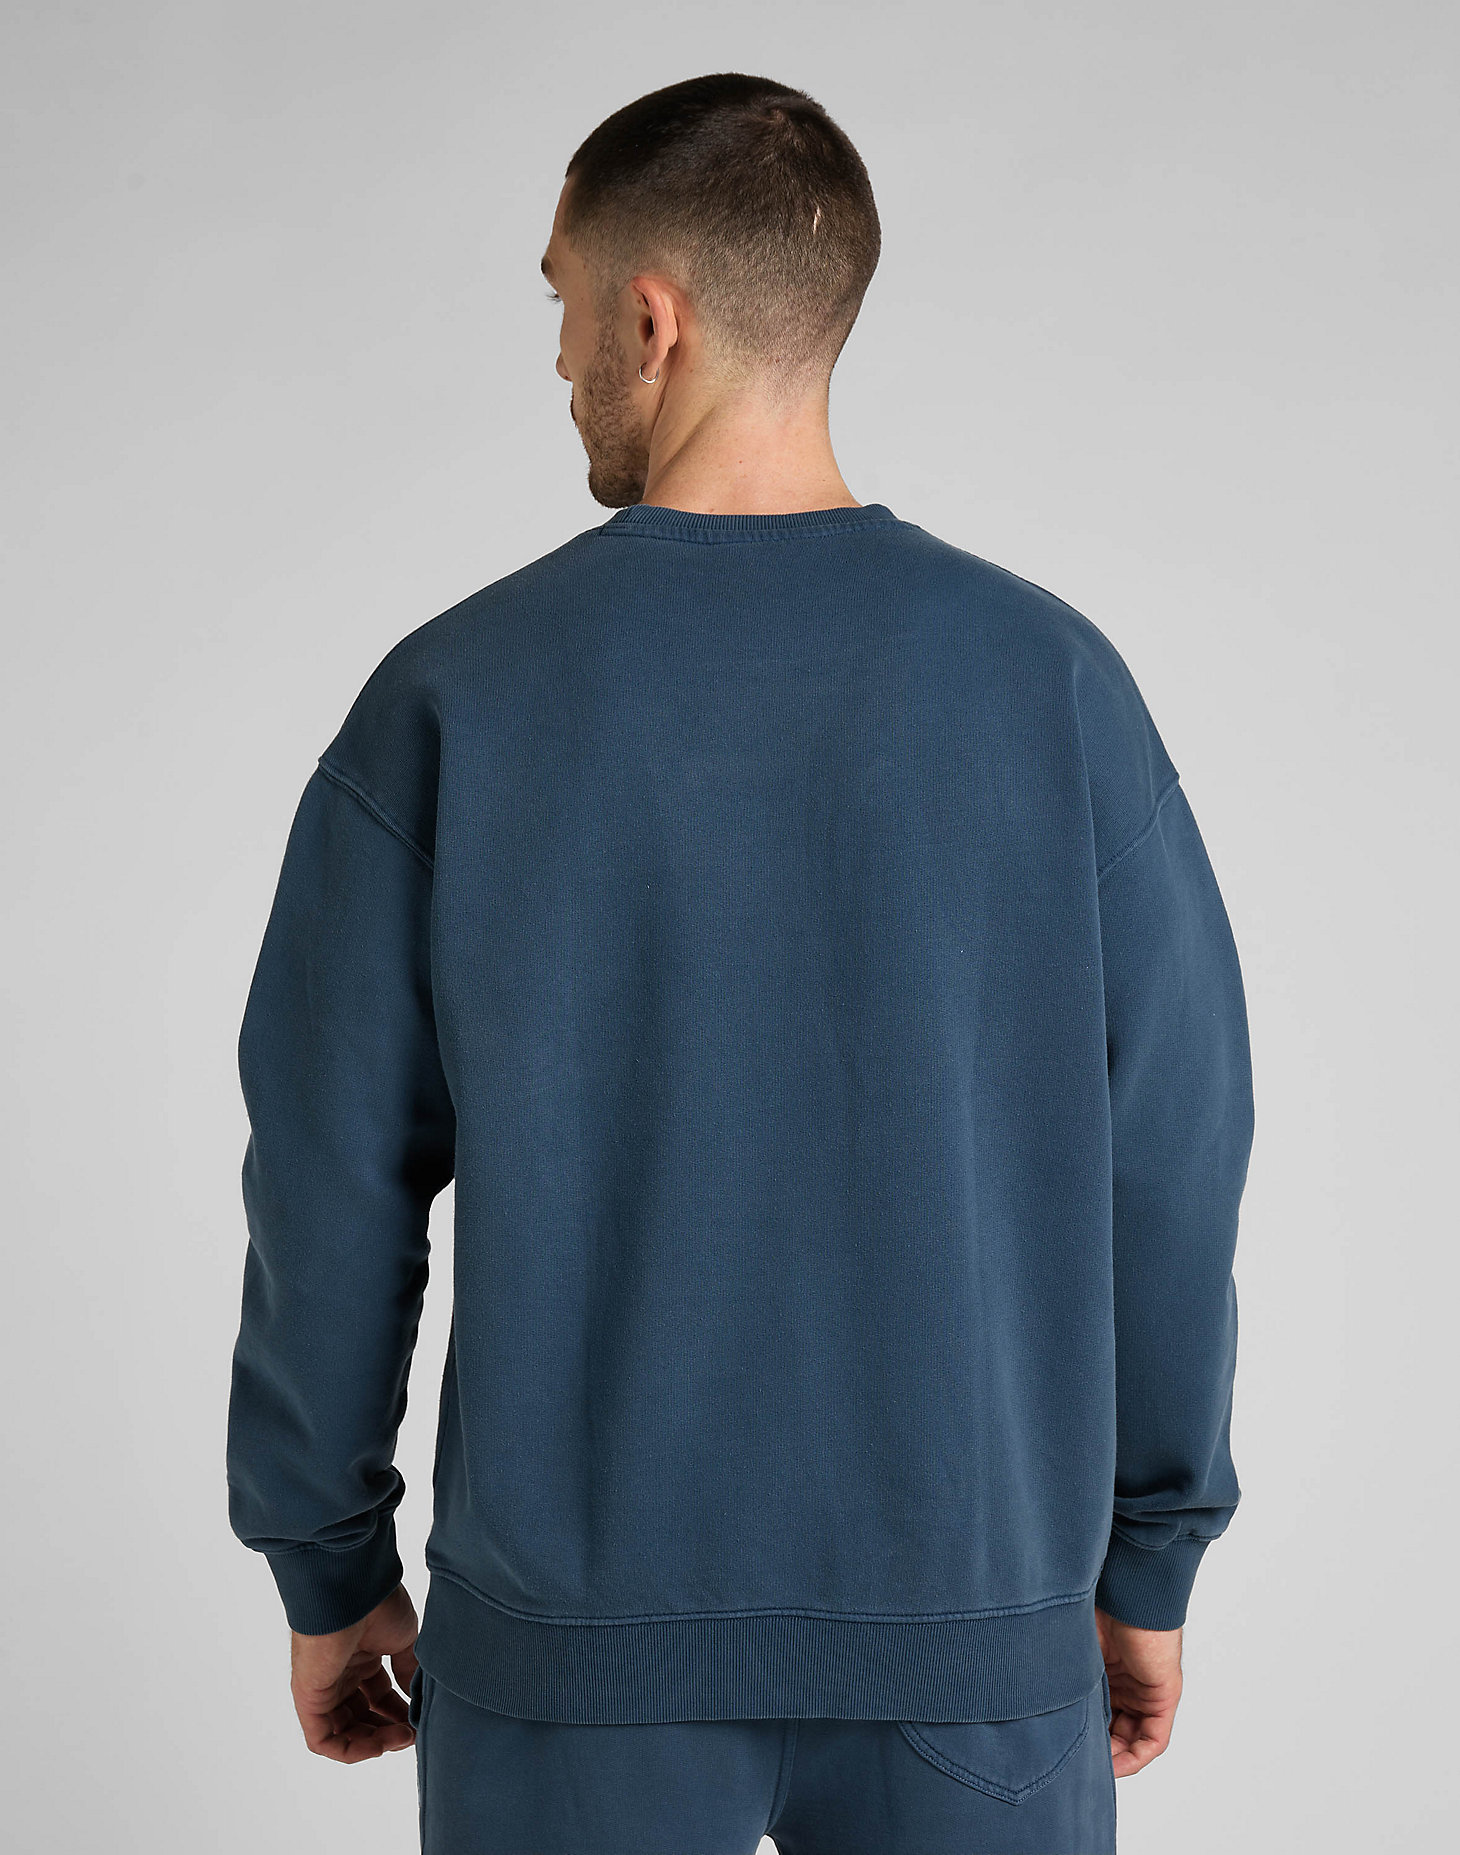 Core Loose Sweatshirt in Marine alternative view 1